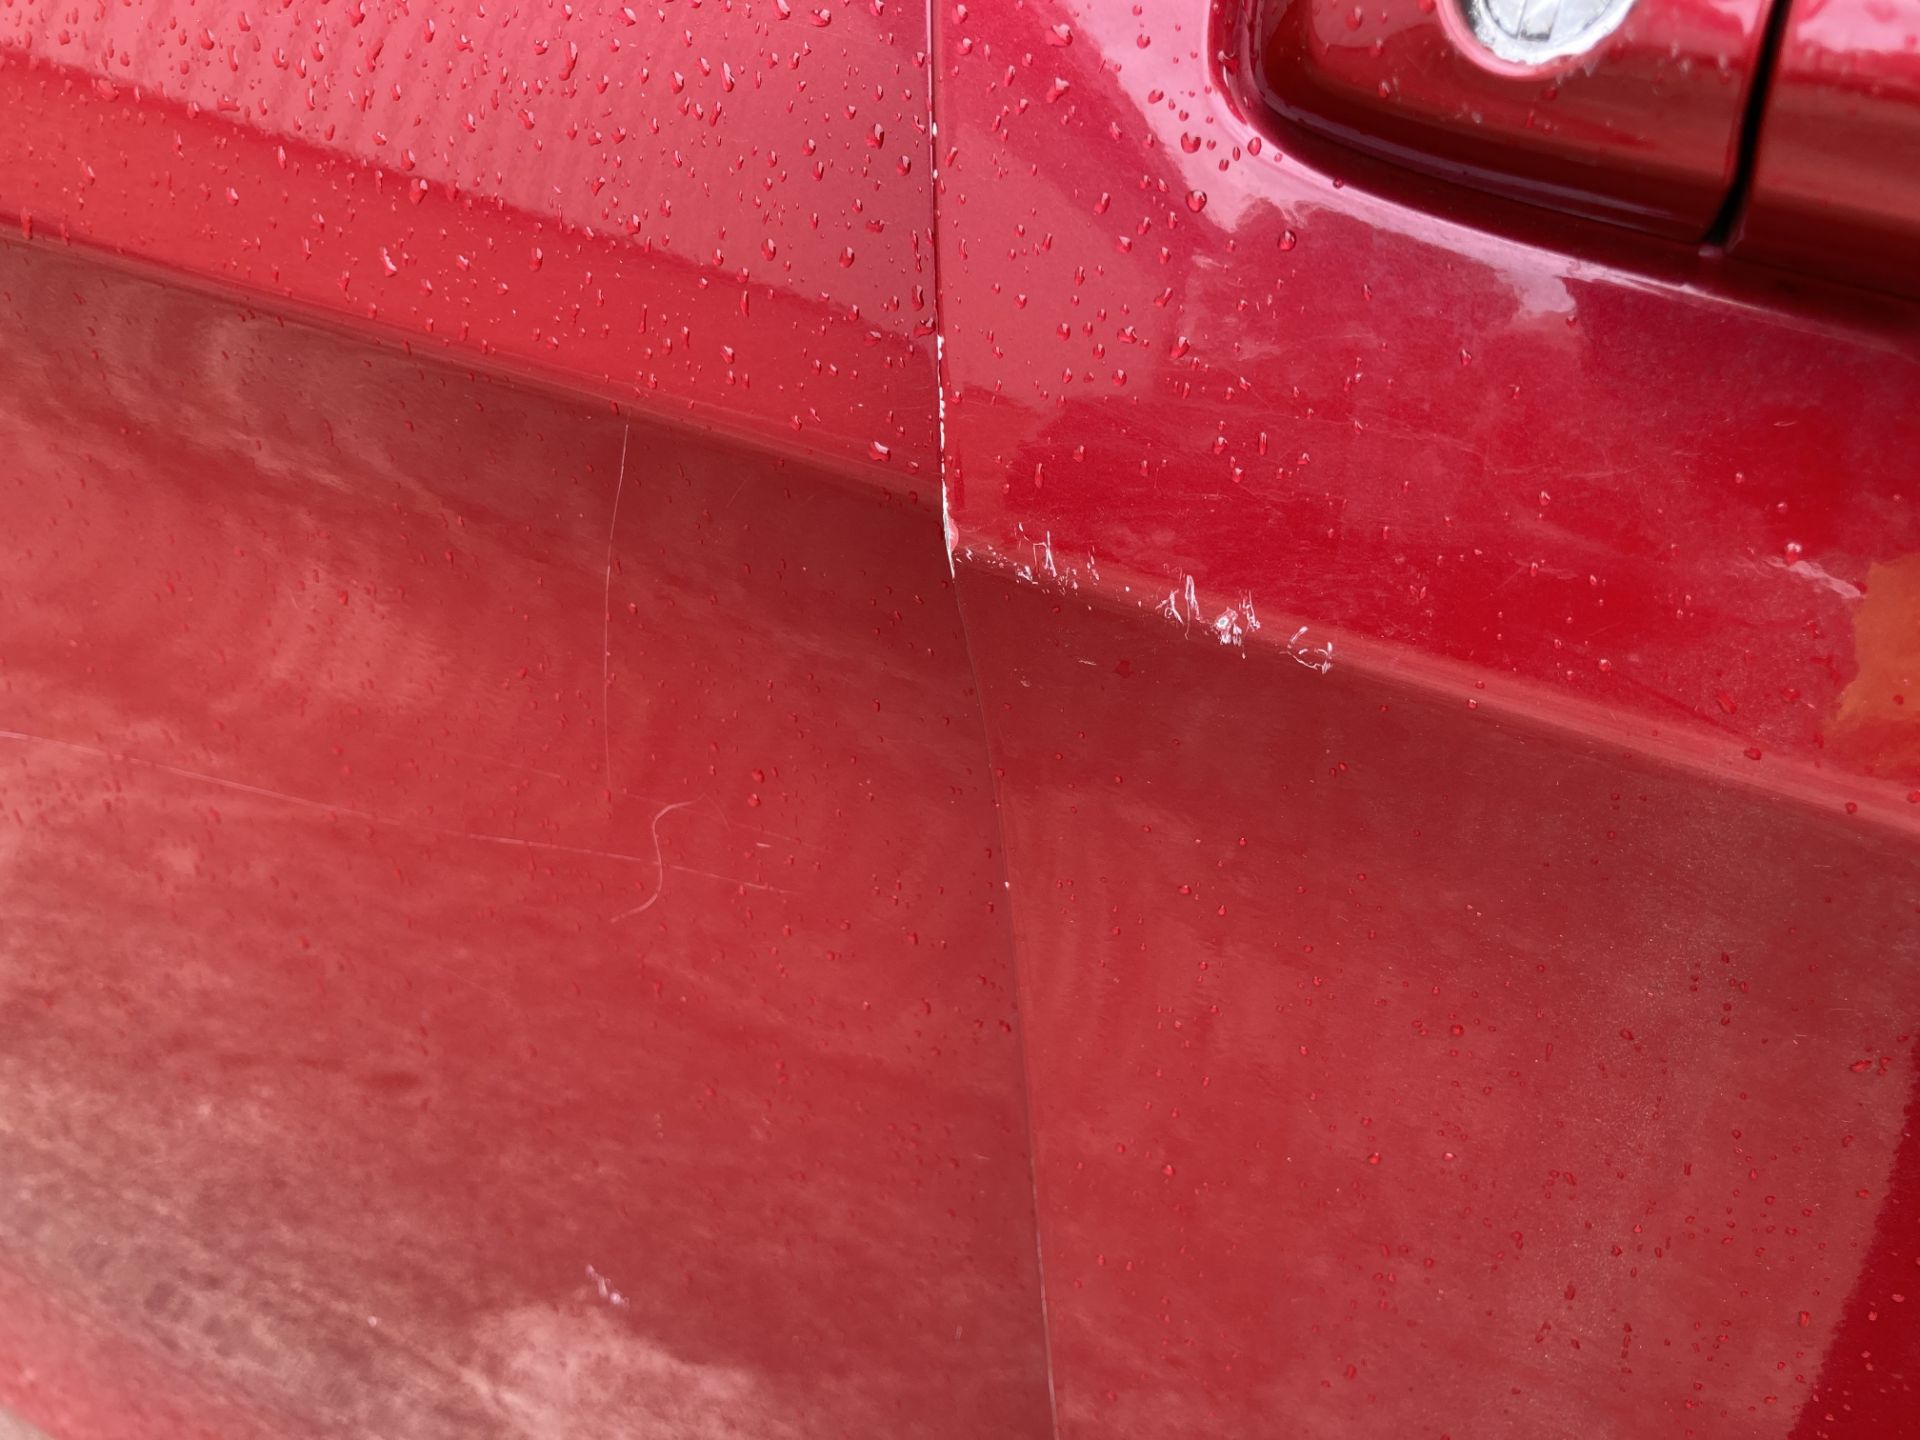 ON INSTRUCTIONS OF THE INSOLVENCY SERVICE SUZUKI CELERIO SZ2 5 door hatchback - petrol - red Reg - Image 10 of 15